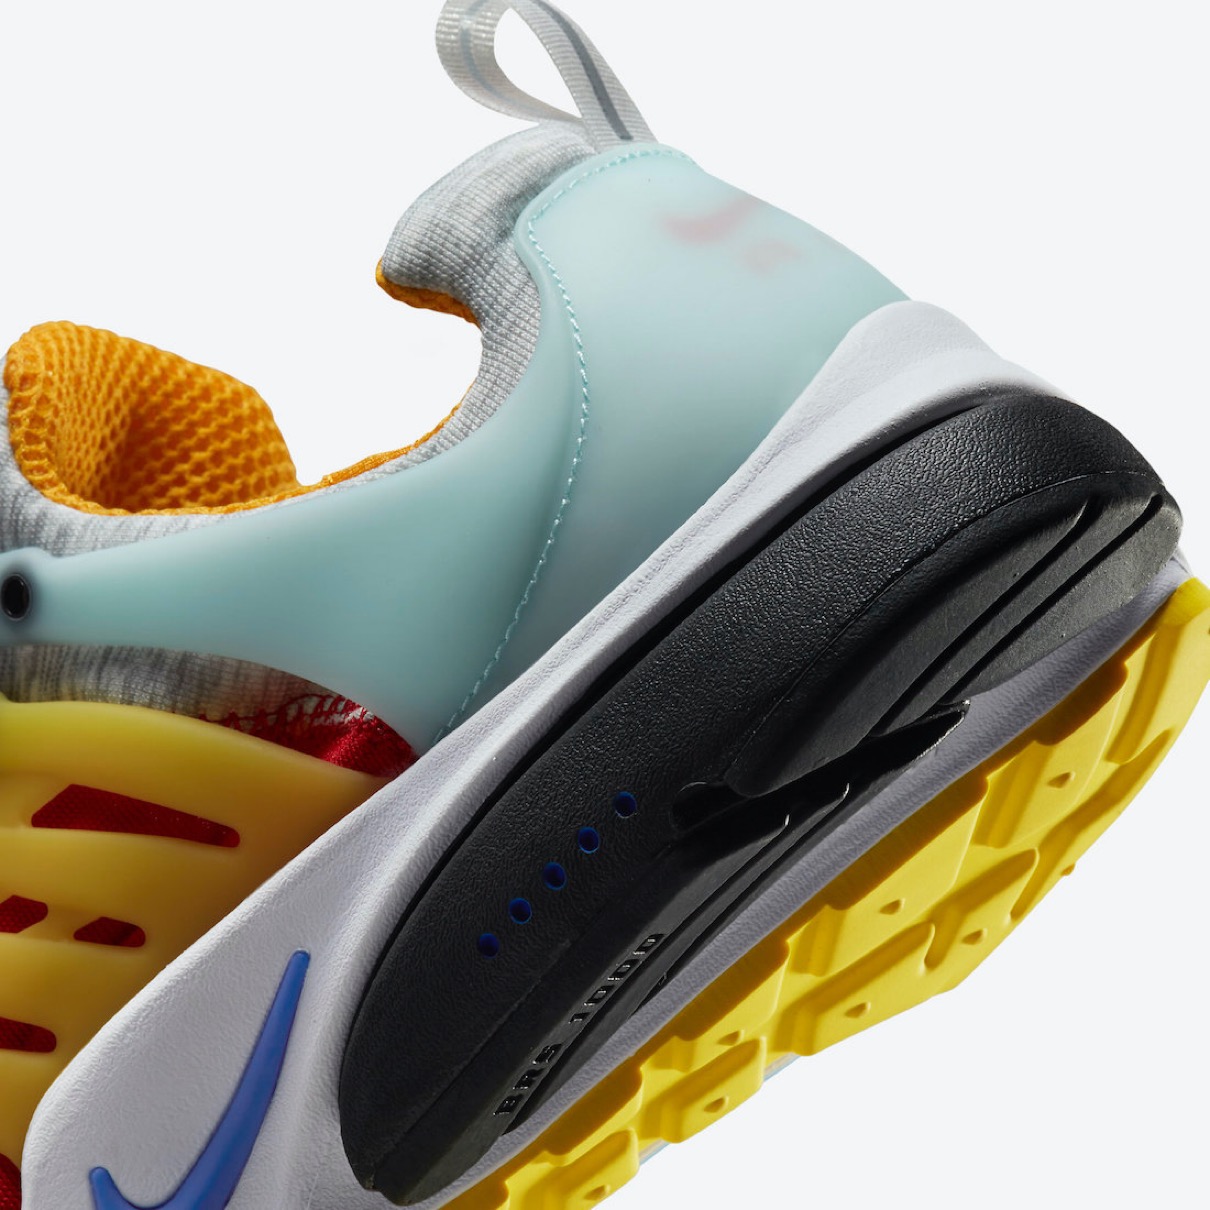 Nike】Air Presto “Multi-Color Storm”が国内8月27日に発売予定 | UP 